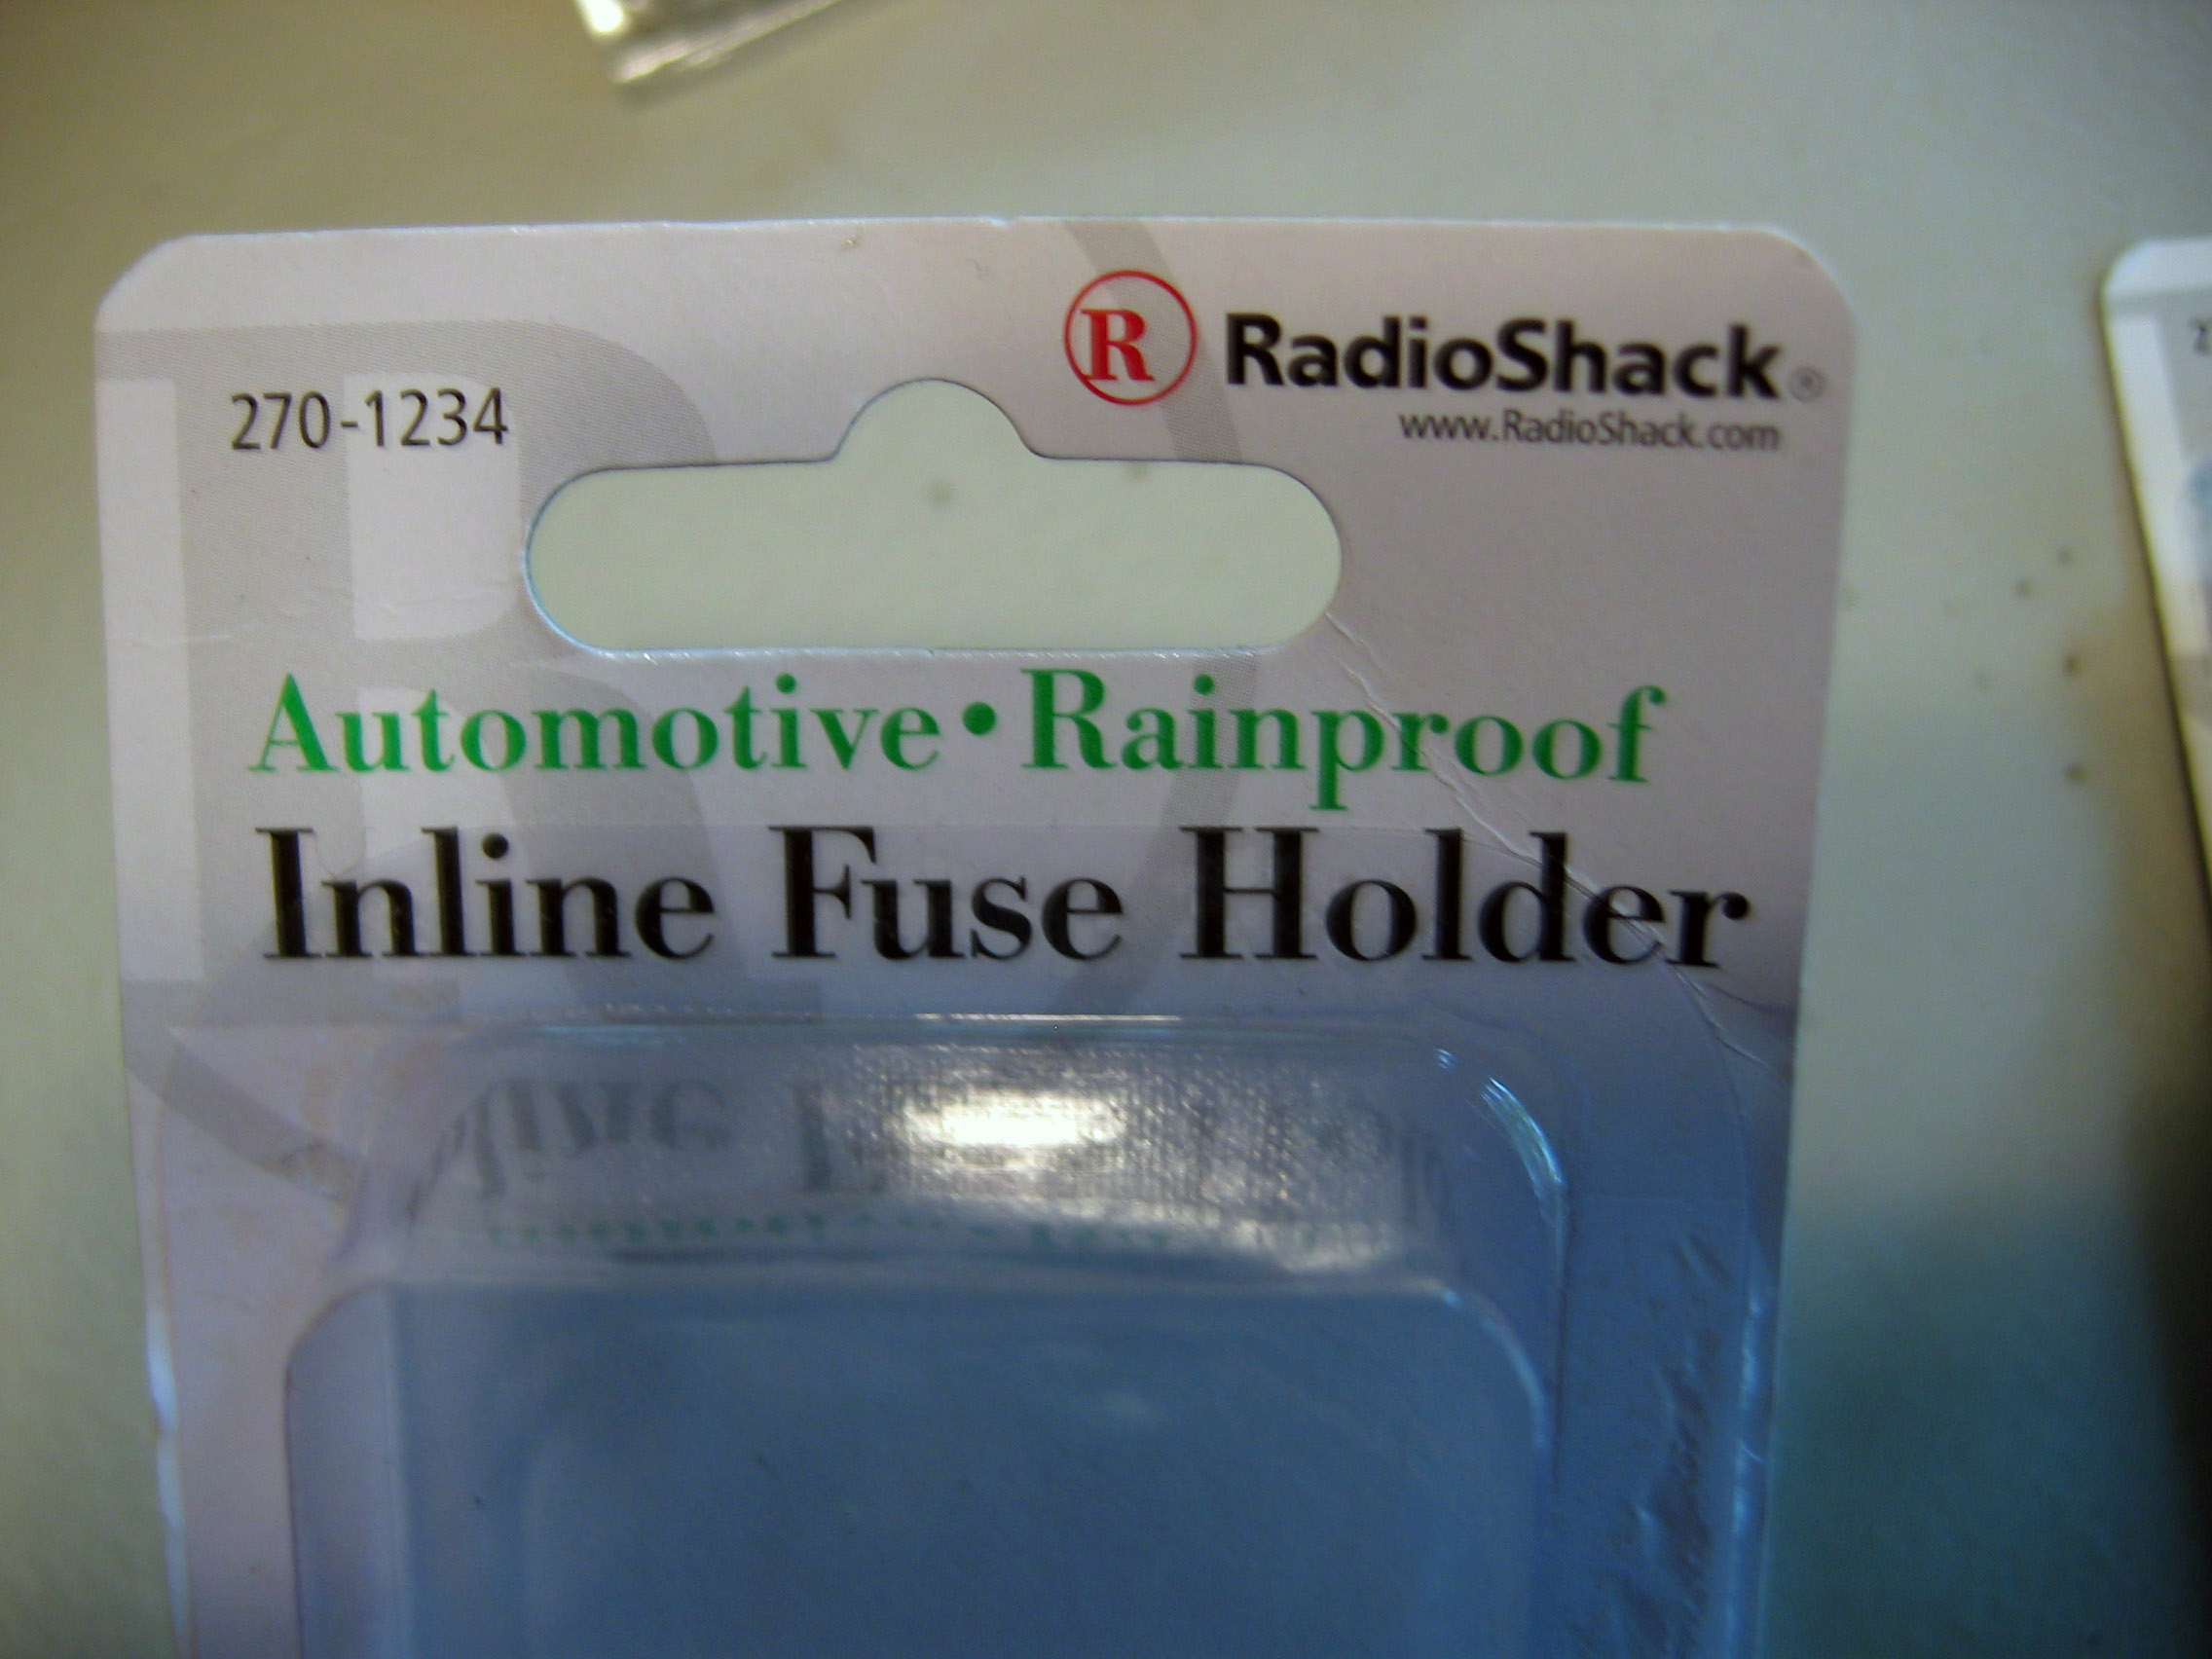 RadioShack Automotive Rainproof Inline Fuse Holder 270-1234 